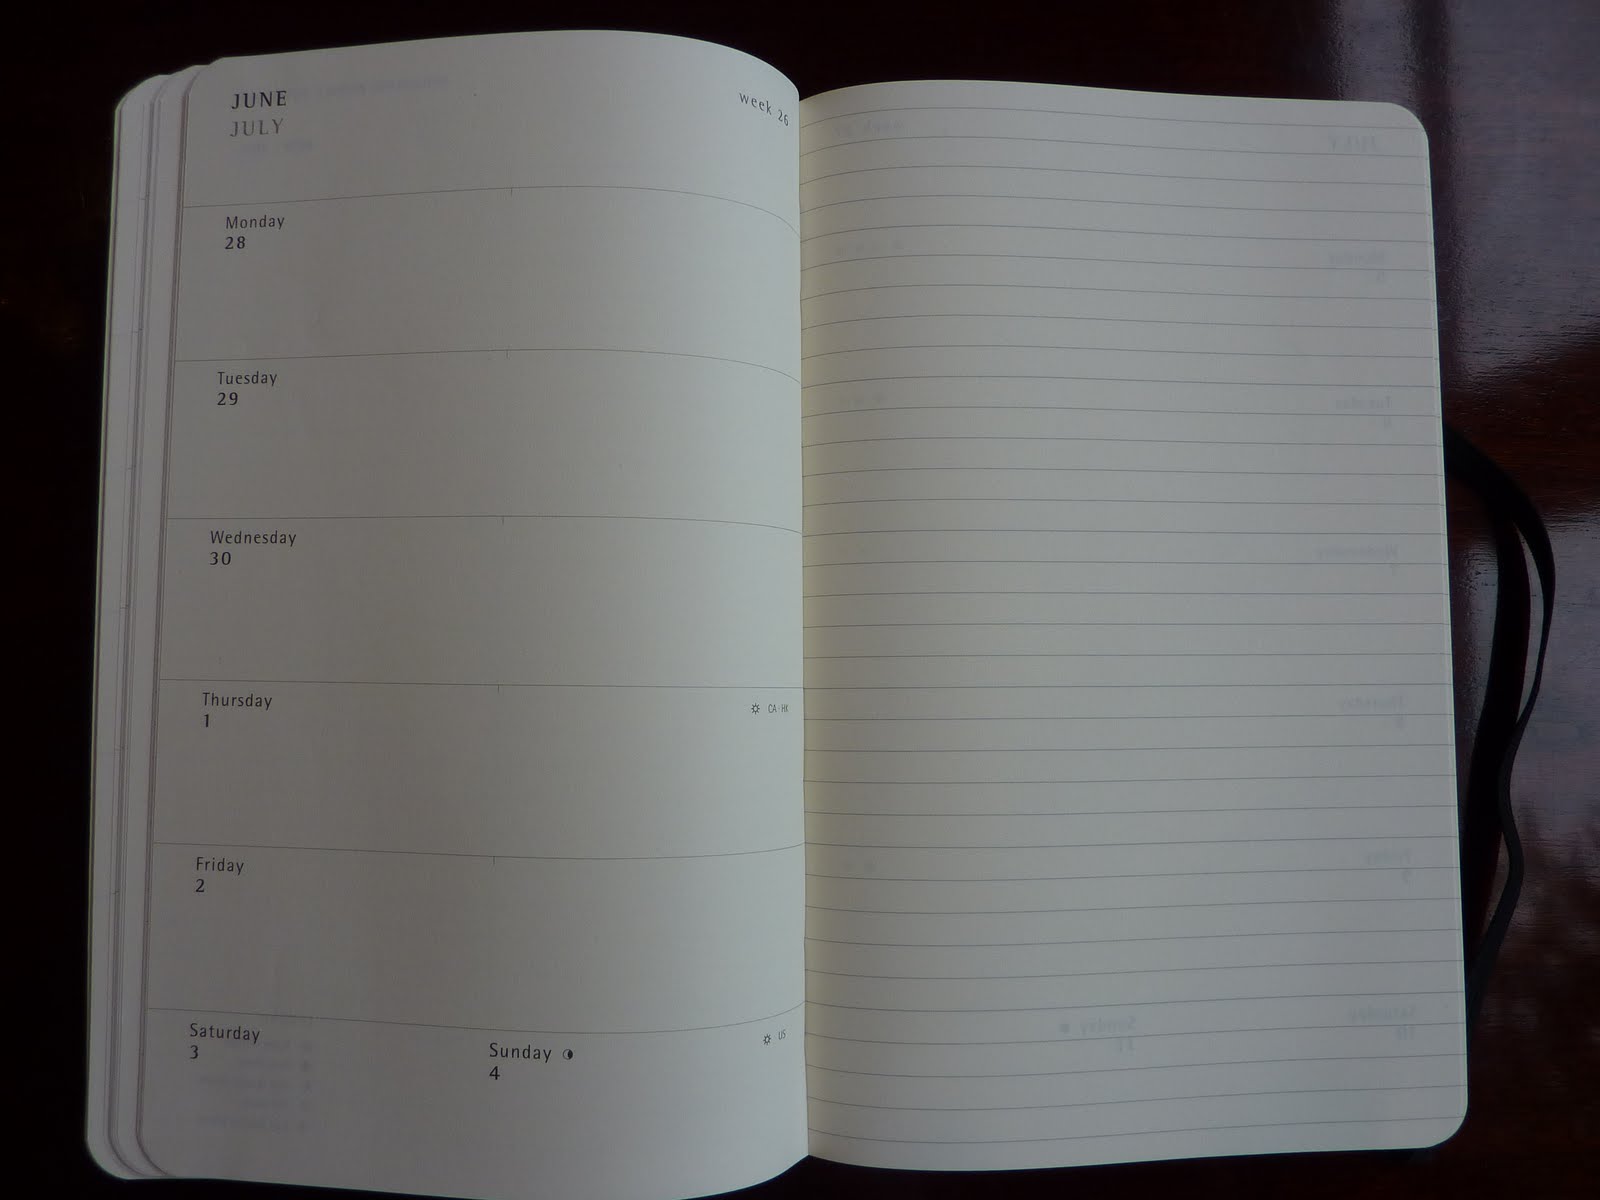 How to write diaries